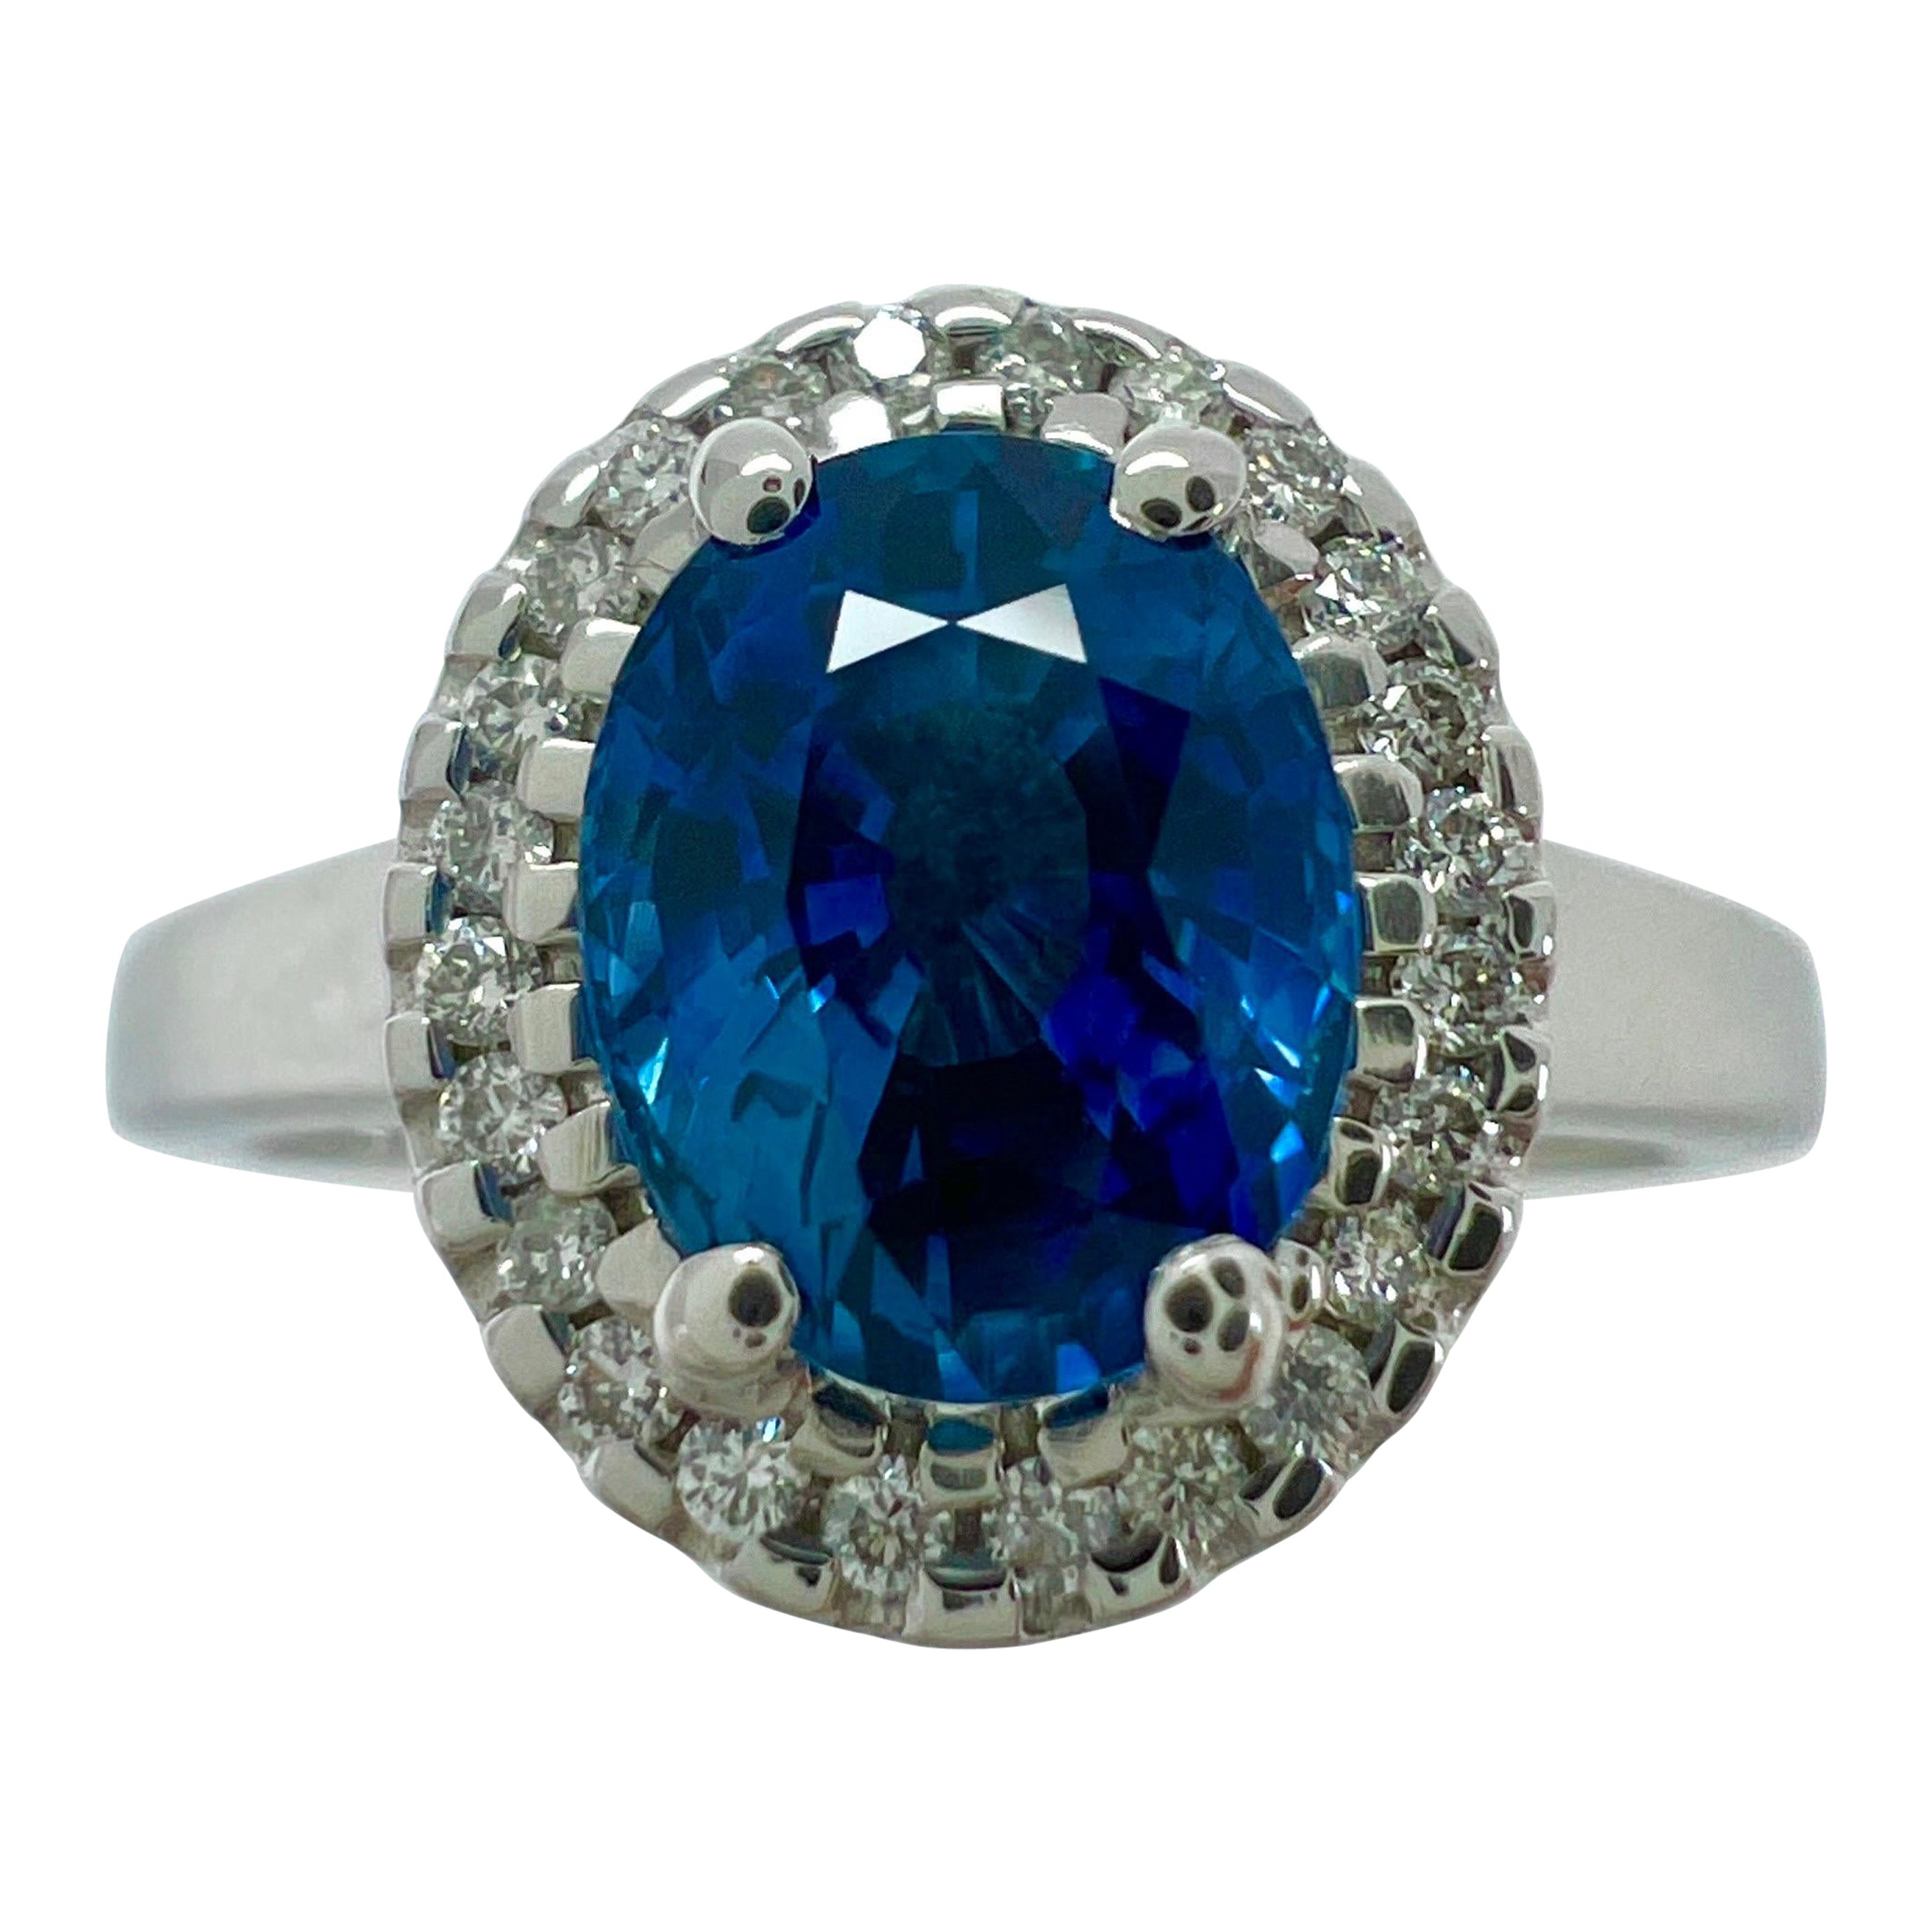 1.56 Carat Fine Vivid Blue Ceylon Sapphire And Diamond 18k White Gold Halo Ring